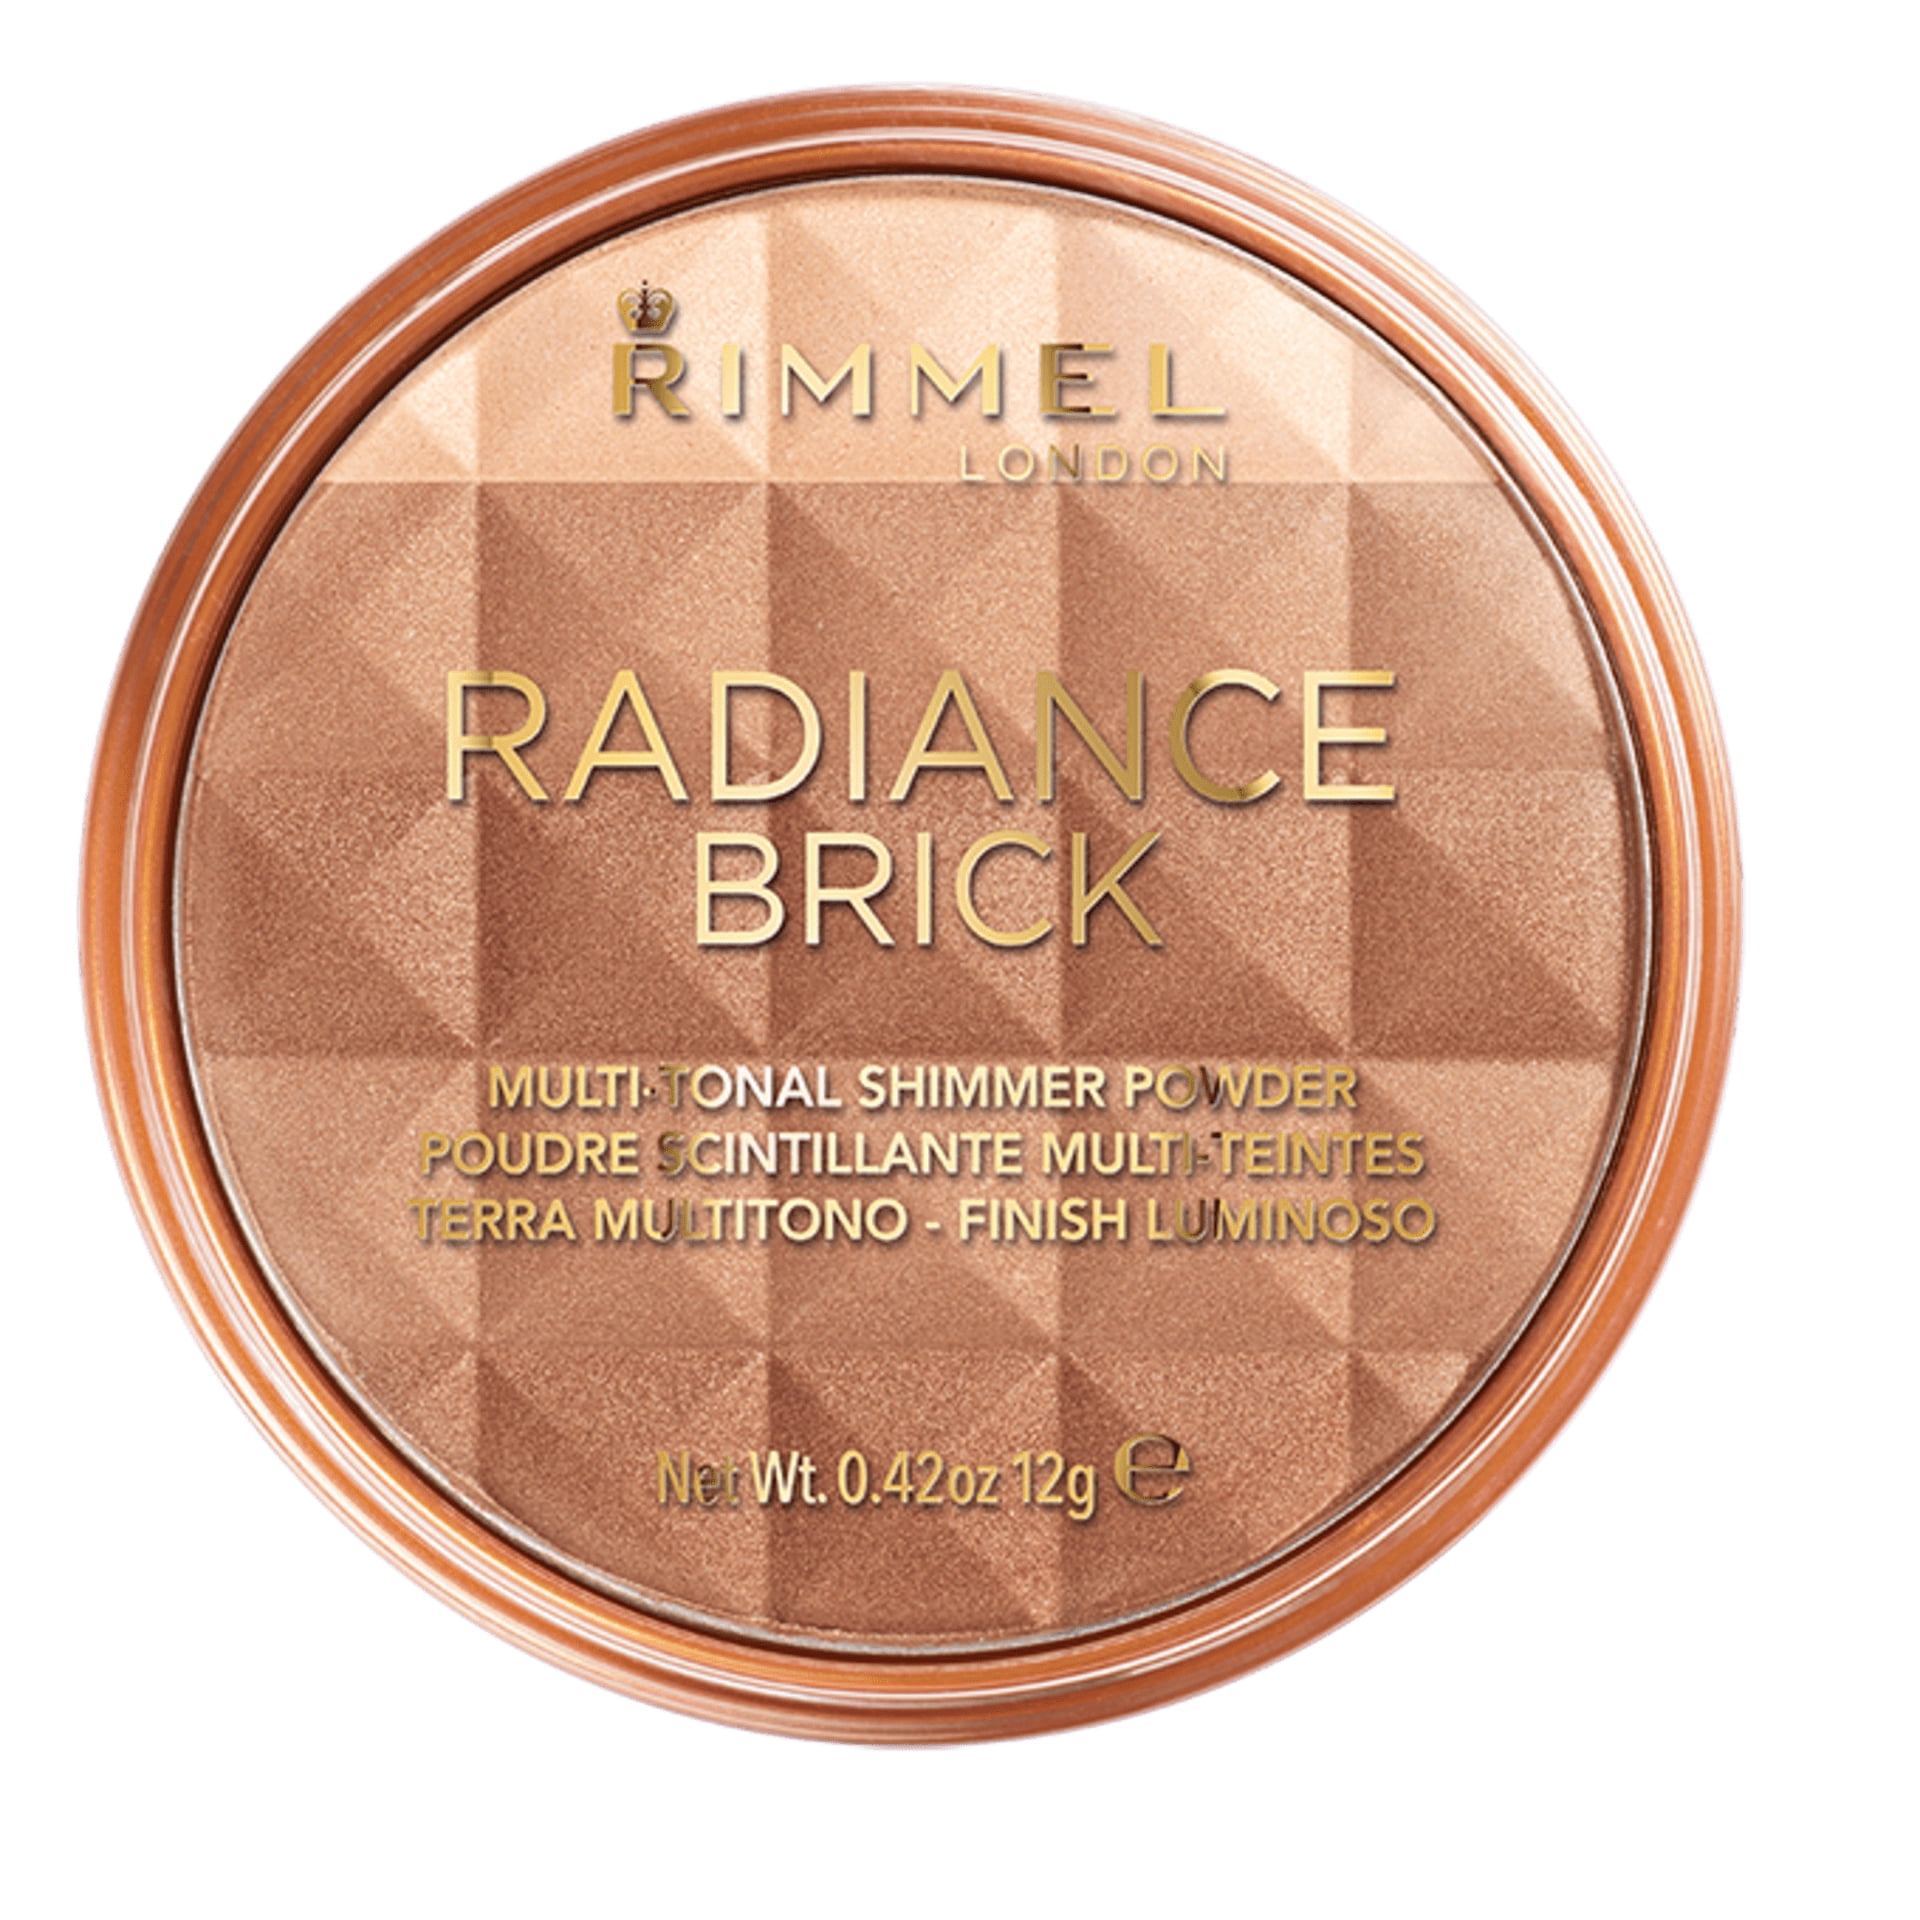 Rimmel London Radiance Bricks, Light, 0.49 oz